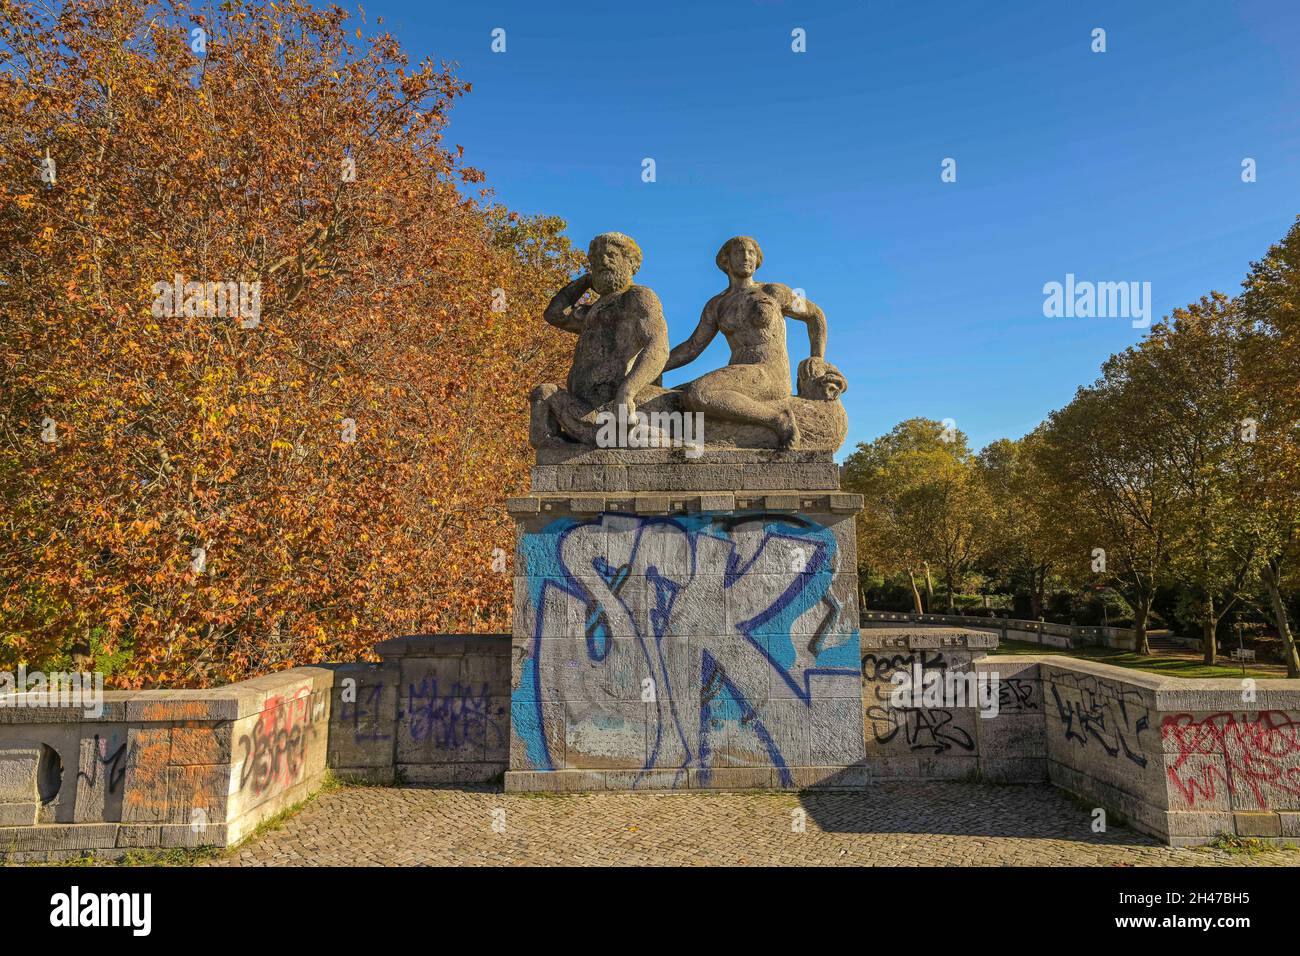 Herbst, Steinfiguren, Carl-Zuckmayer-Brücke, Rudolph-Wilde-Park, Schöneberg, Tempelhof-Schöneberg, Berlino, Germania Foto Stock